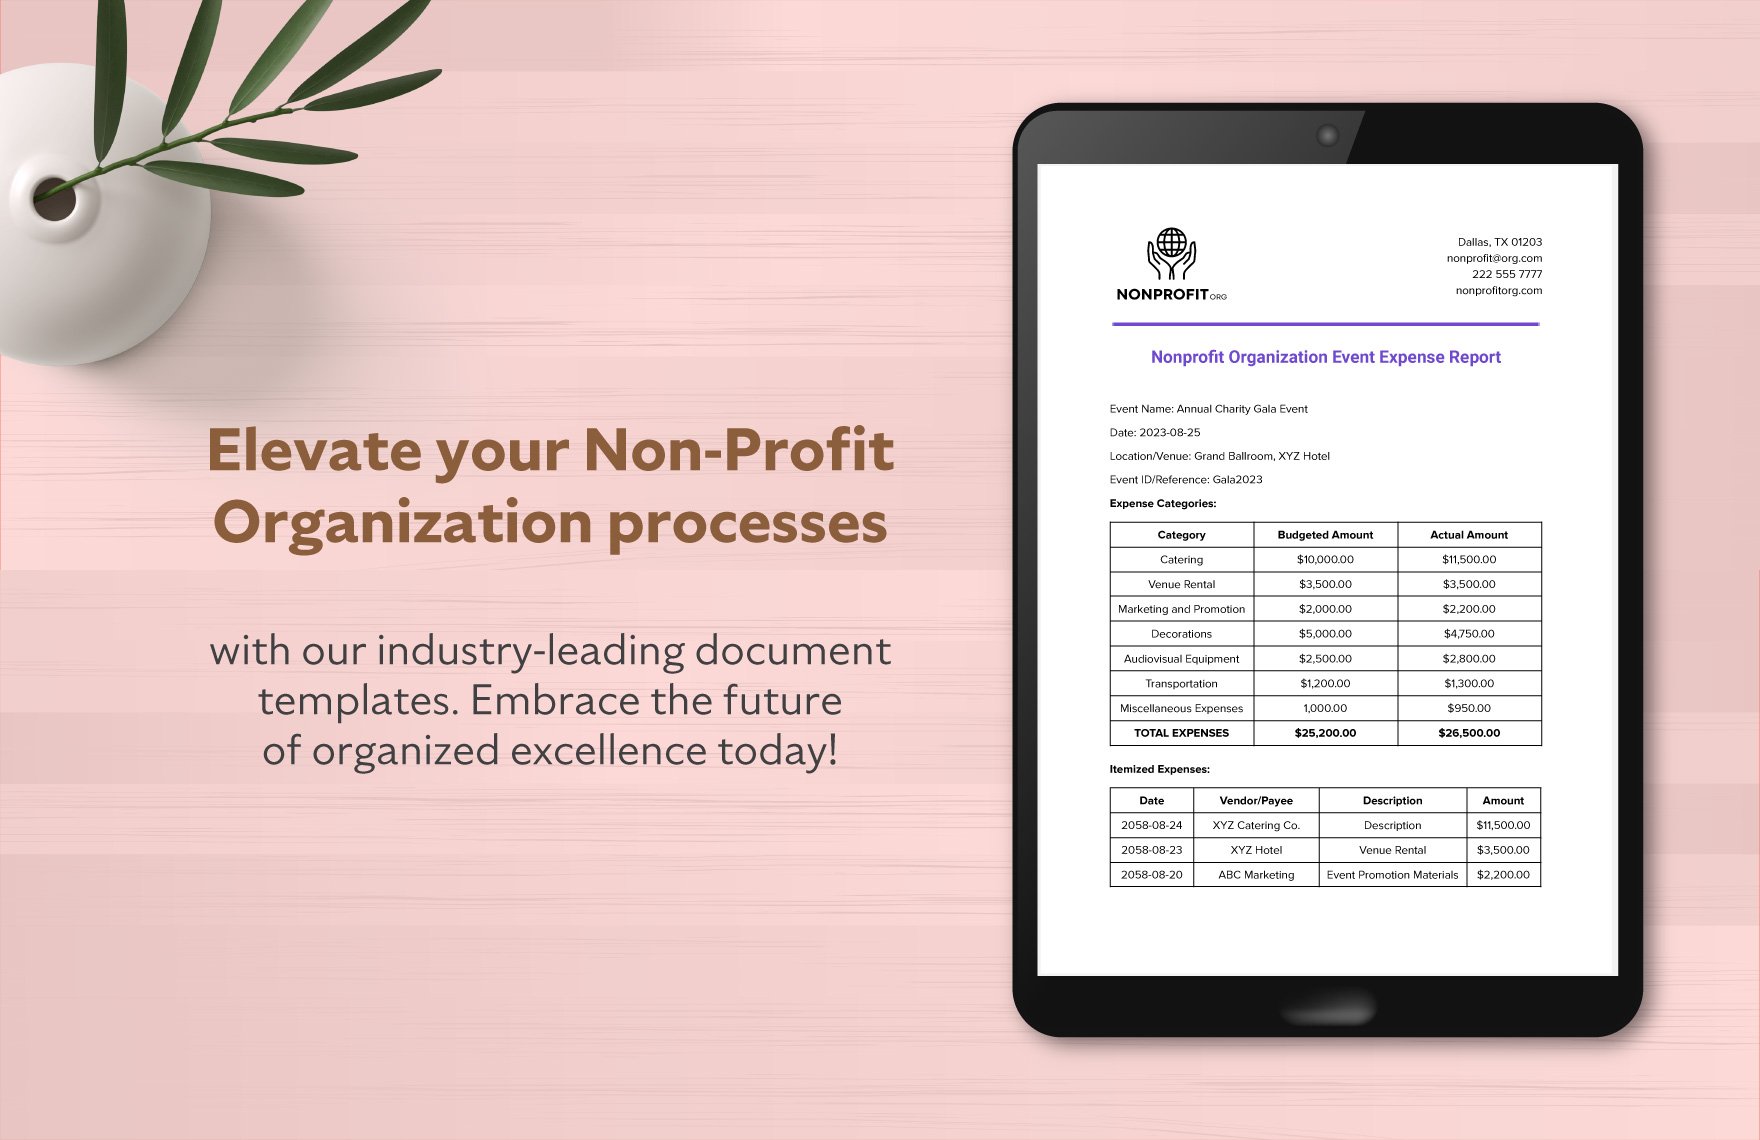 Nonprofit Organization Event Expense Report Template